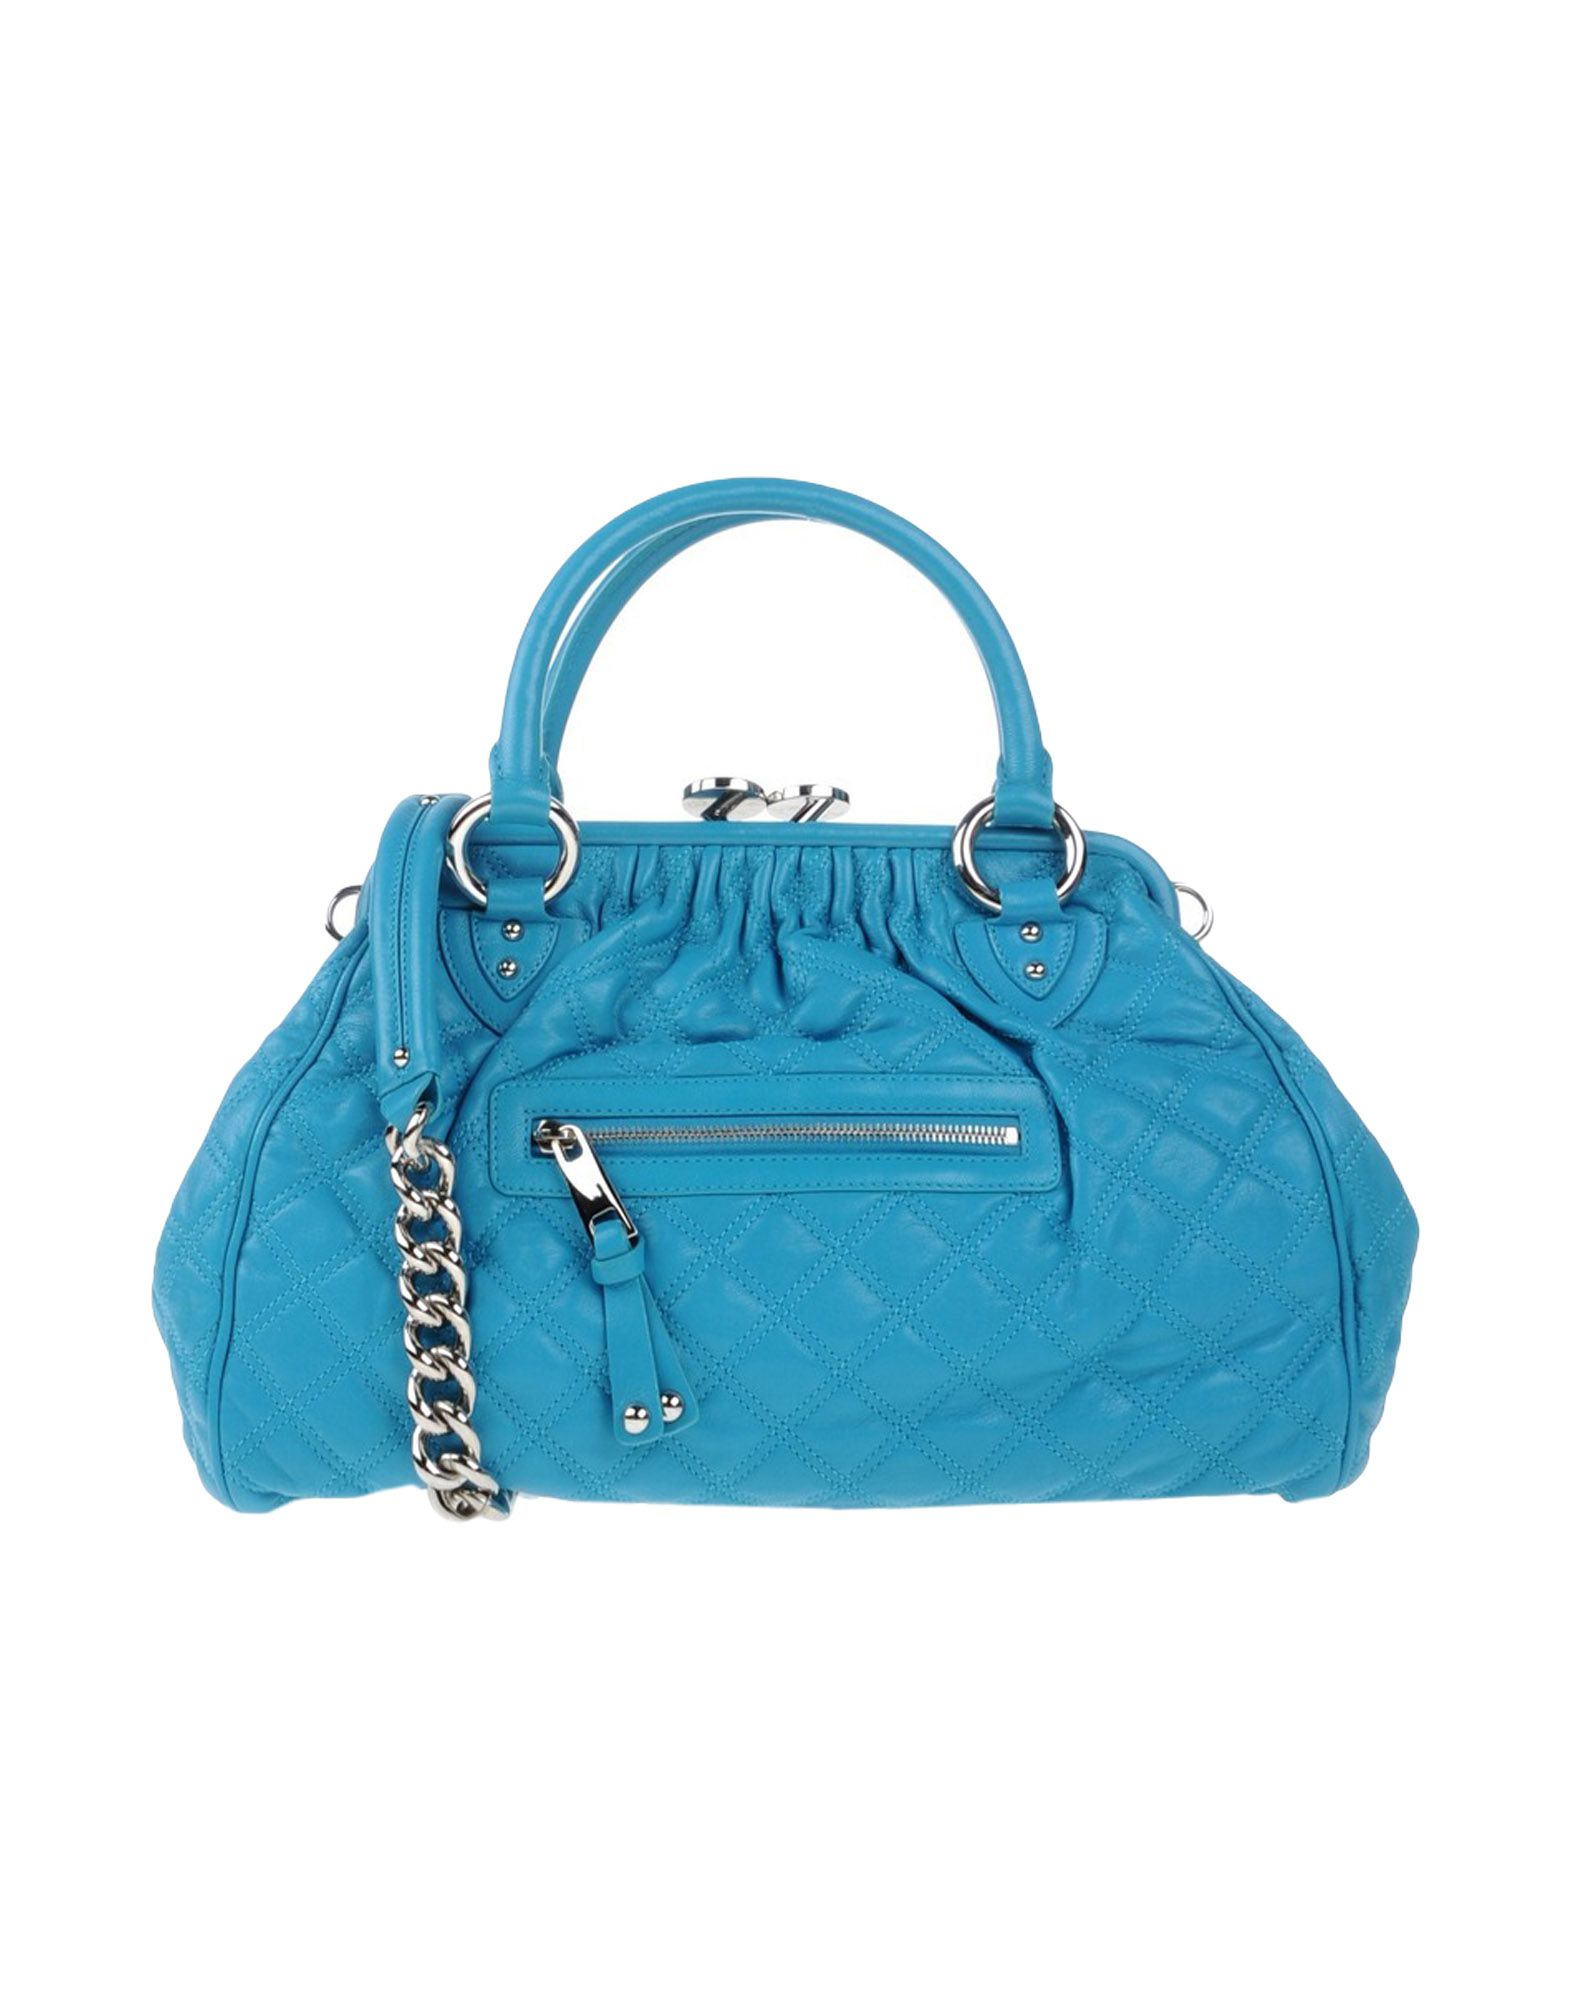 Marc Jacobs Leather Handbag in Azure (Blue) - Lyst